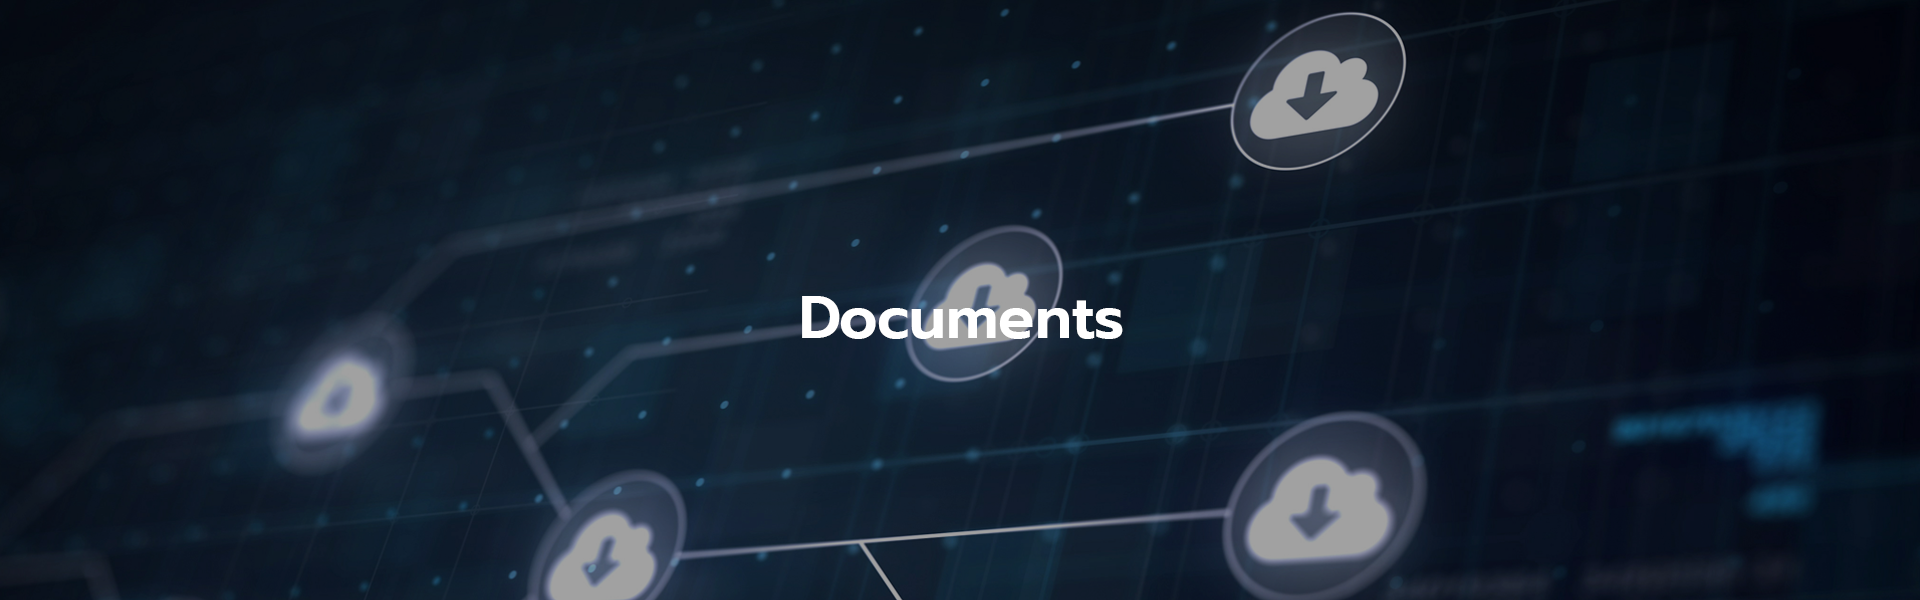 Documents-en